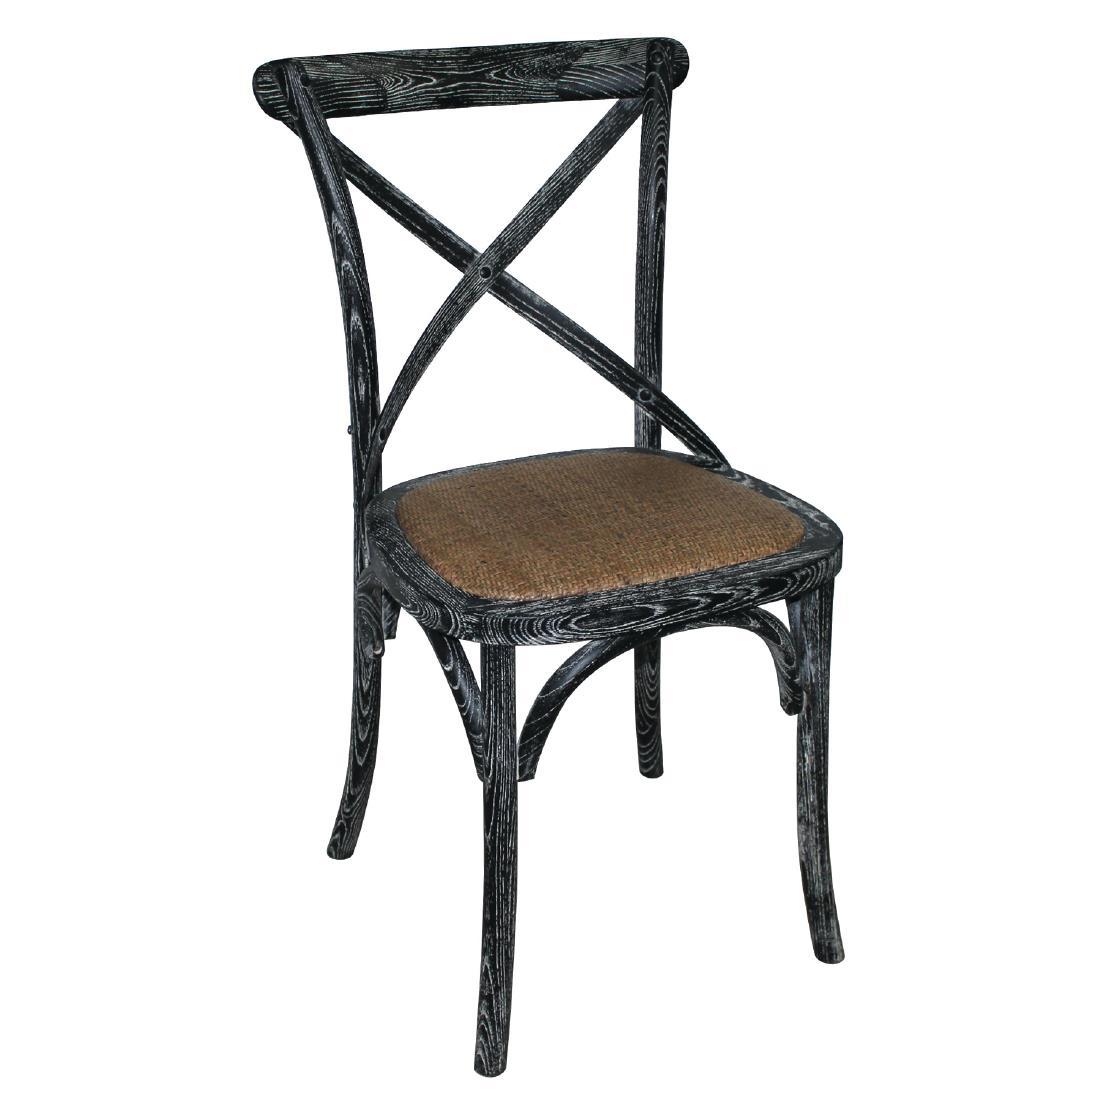 GG654 - Bolero Wooden Dining Chair with Cross Backrest Black Wash Finish (Box 2) - GG654  - 1